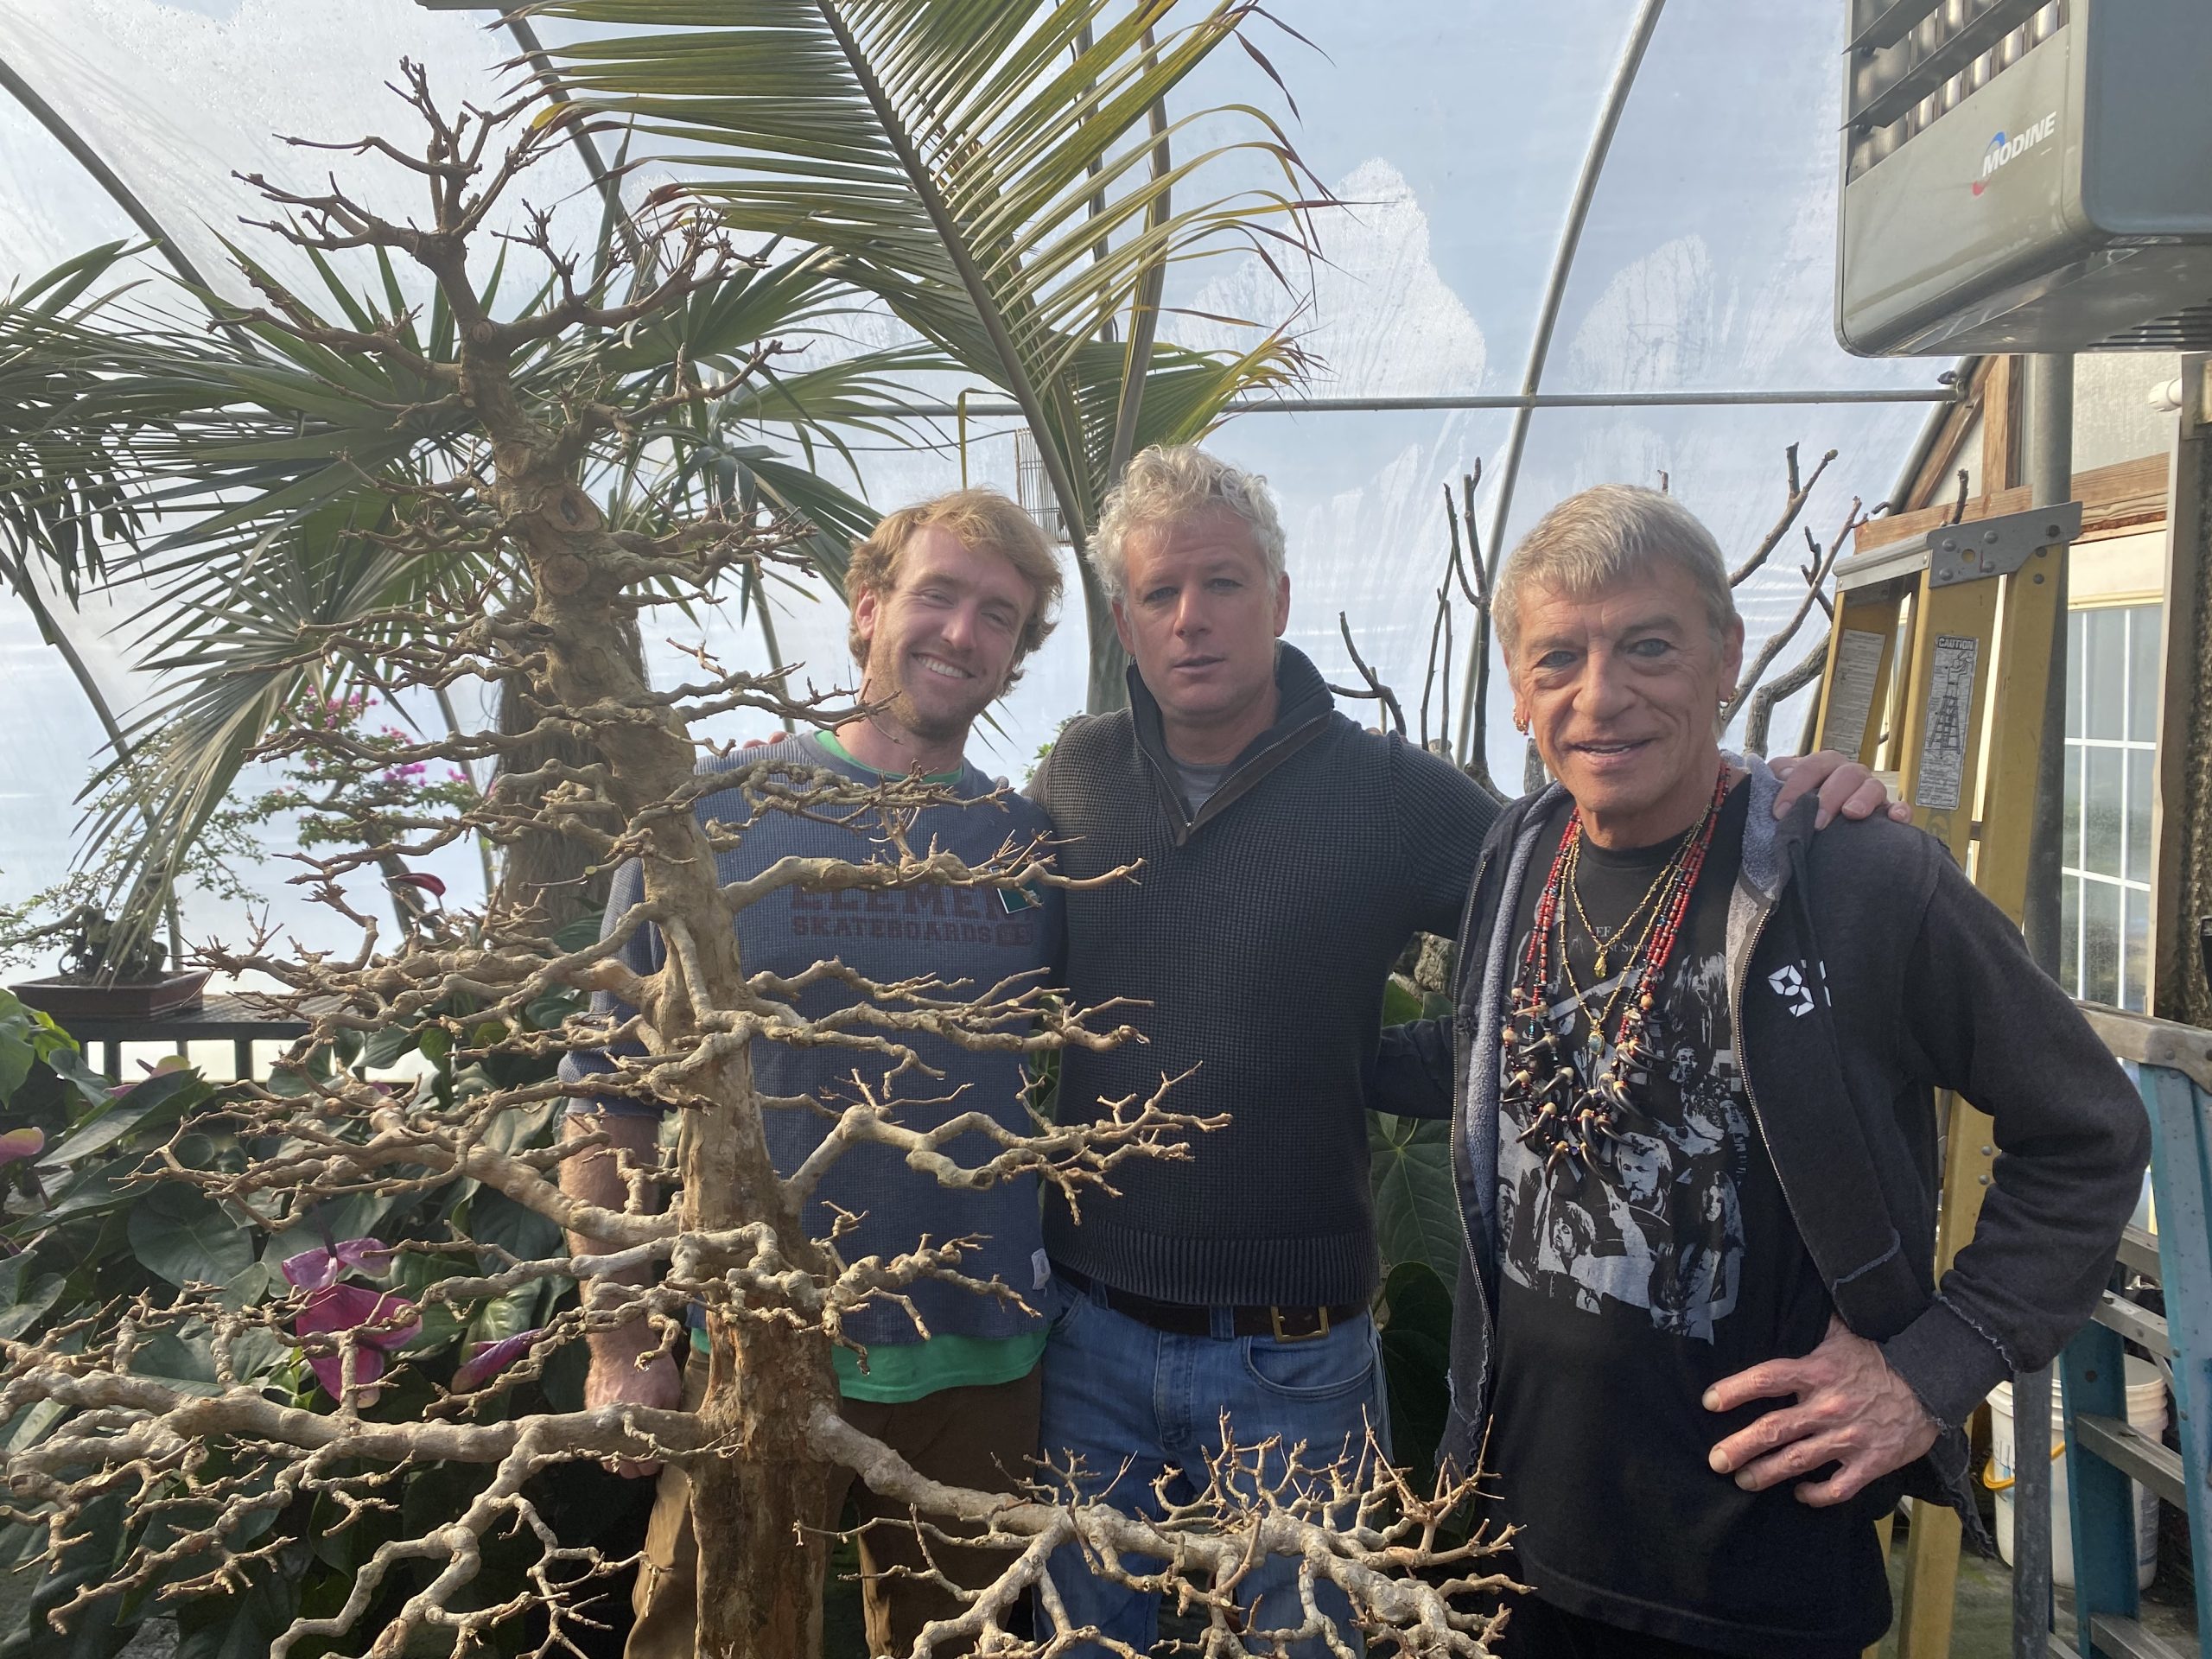 Ryan, Todd, and Bob with a very tall bonsai tree